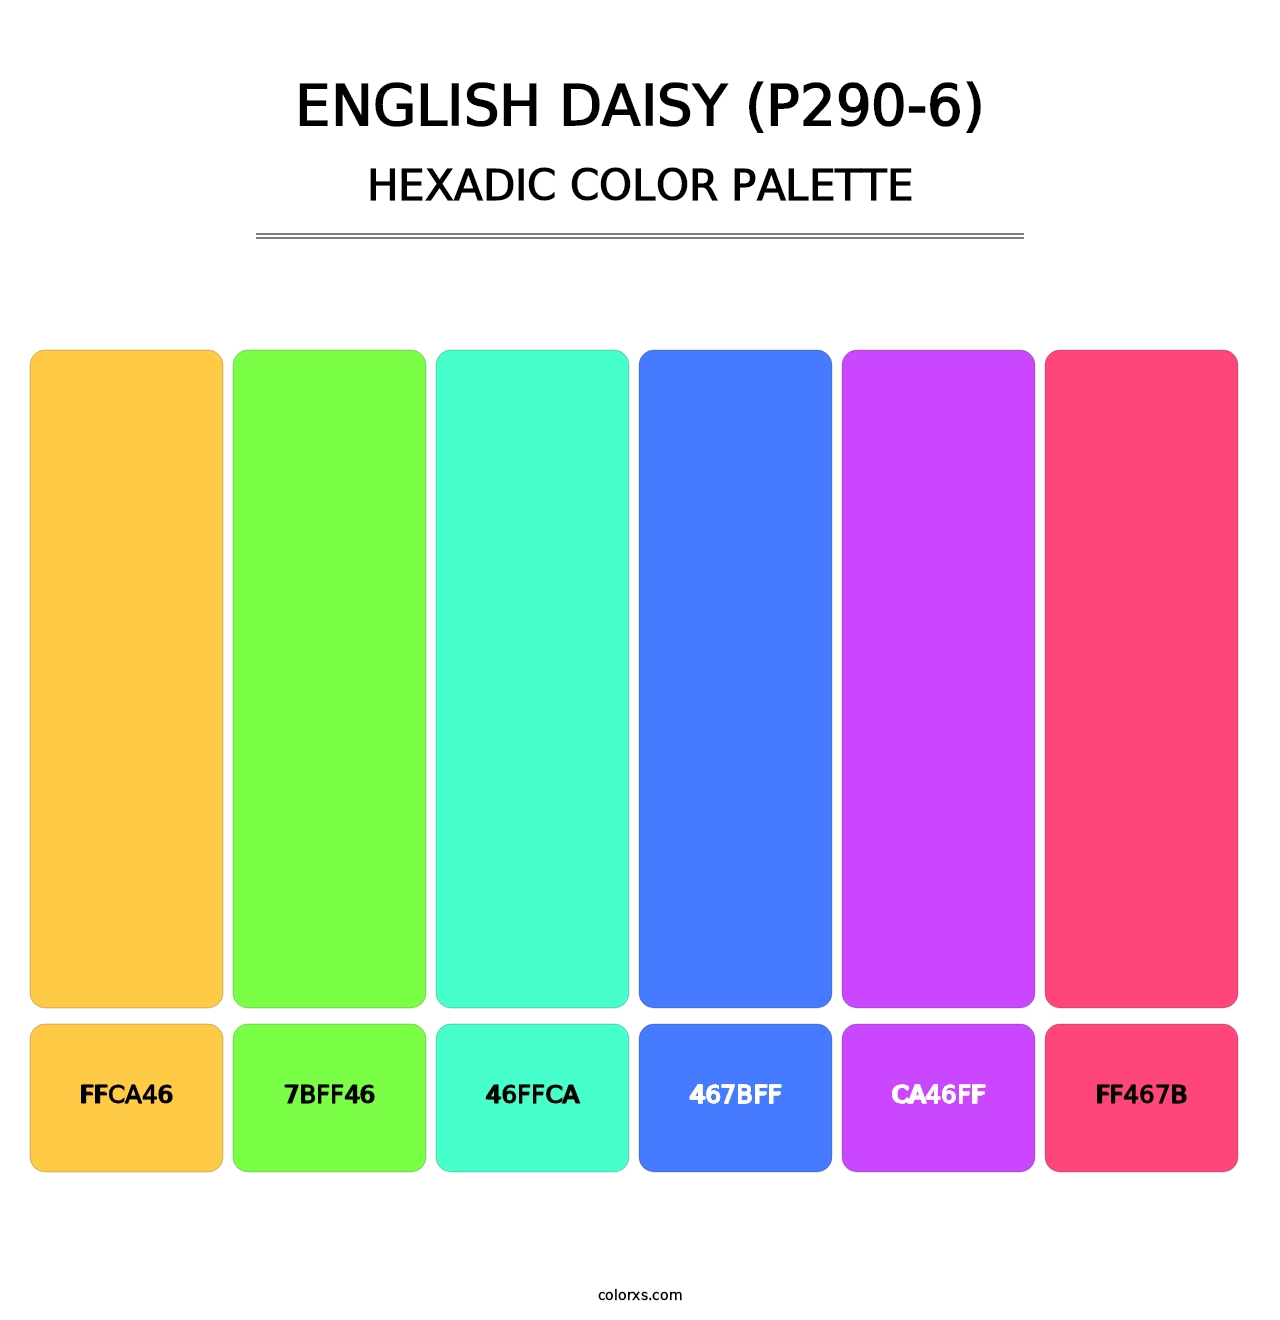 English Daisy (P290-6) - Hexadic Color Palette